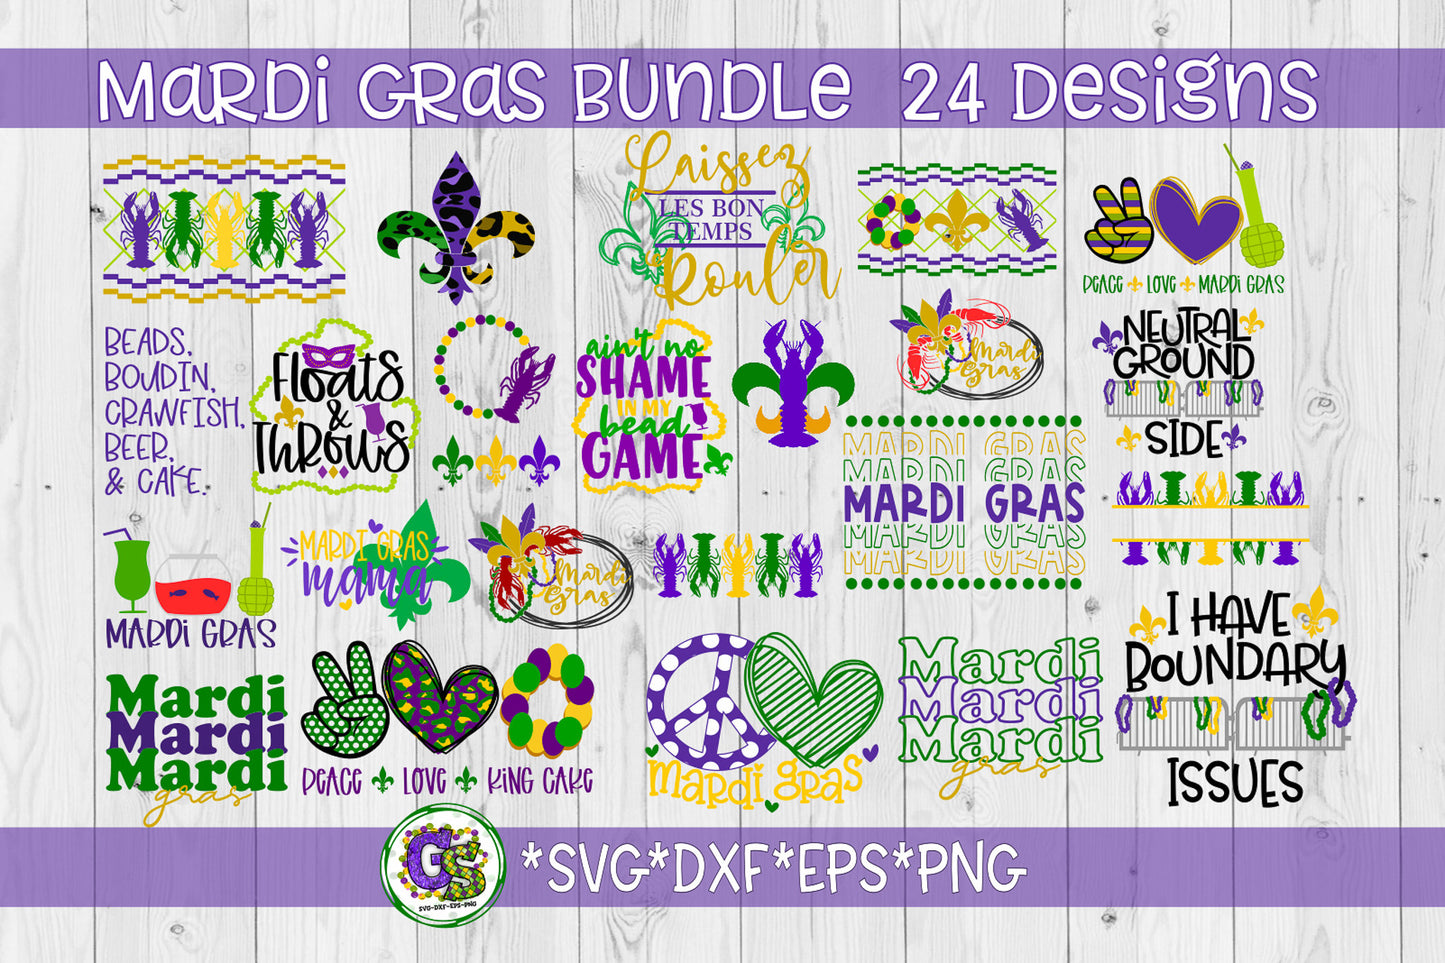 Mardi Gras Bundle svg, dxf, eps, png.  Mardi Gras SvG | Beads SVG | Mardi Gras SvG | King Cake SvG |Laissez Svg | Instant Download Cut Files